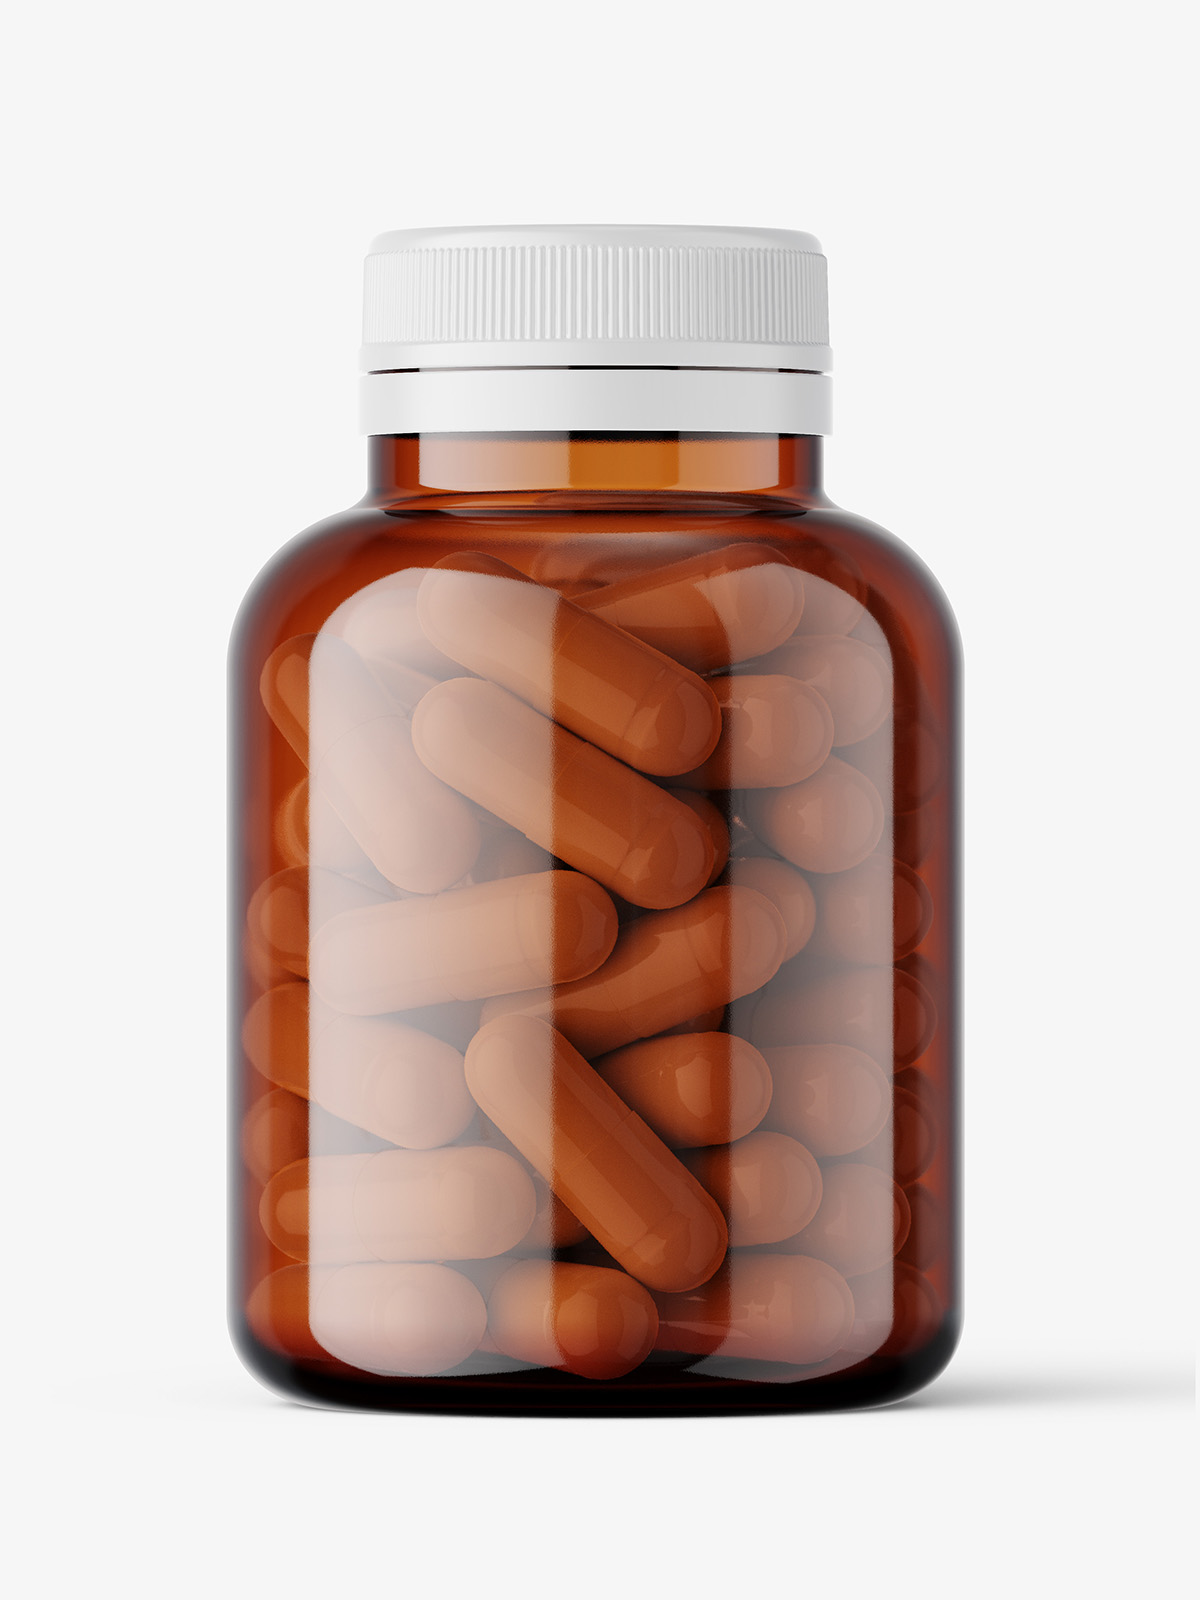 Download Jar with capsules mockup / amber - Smarty Mockups